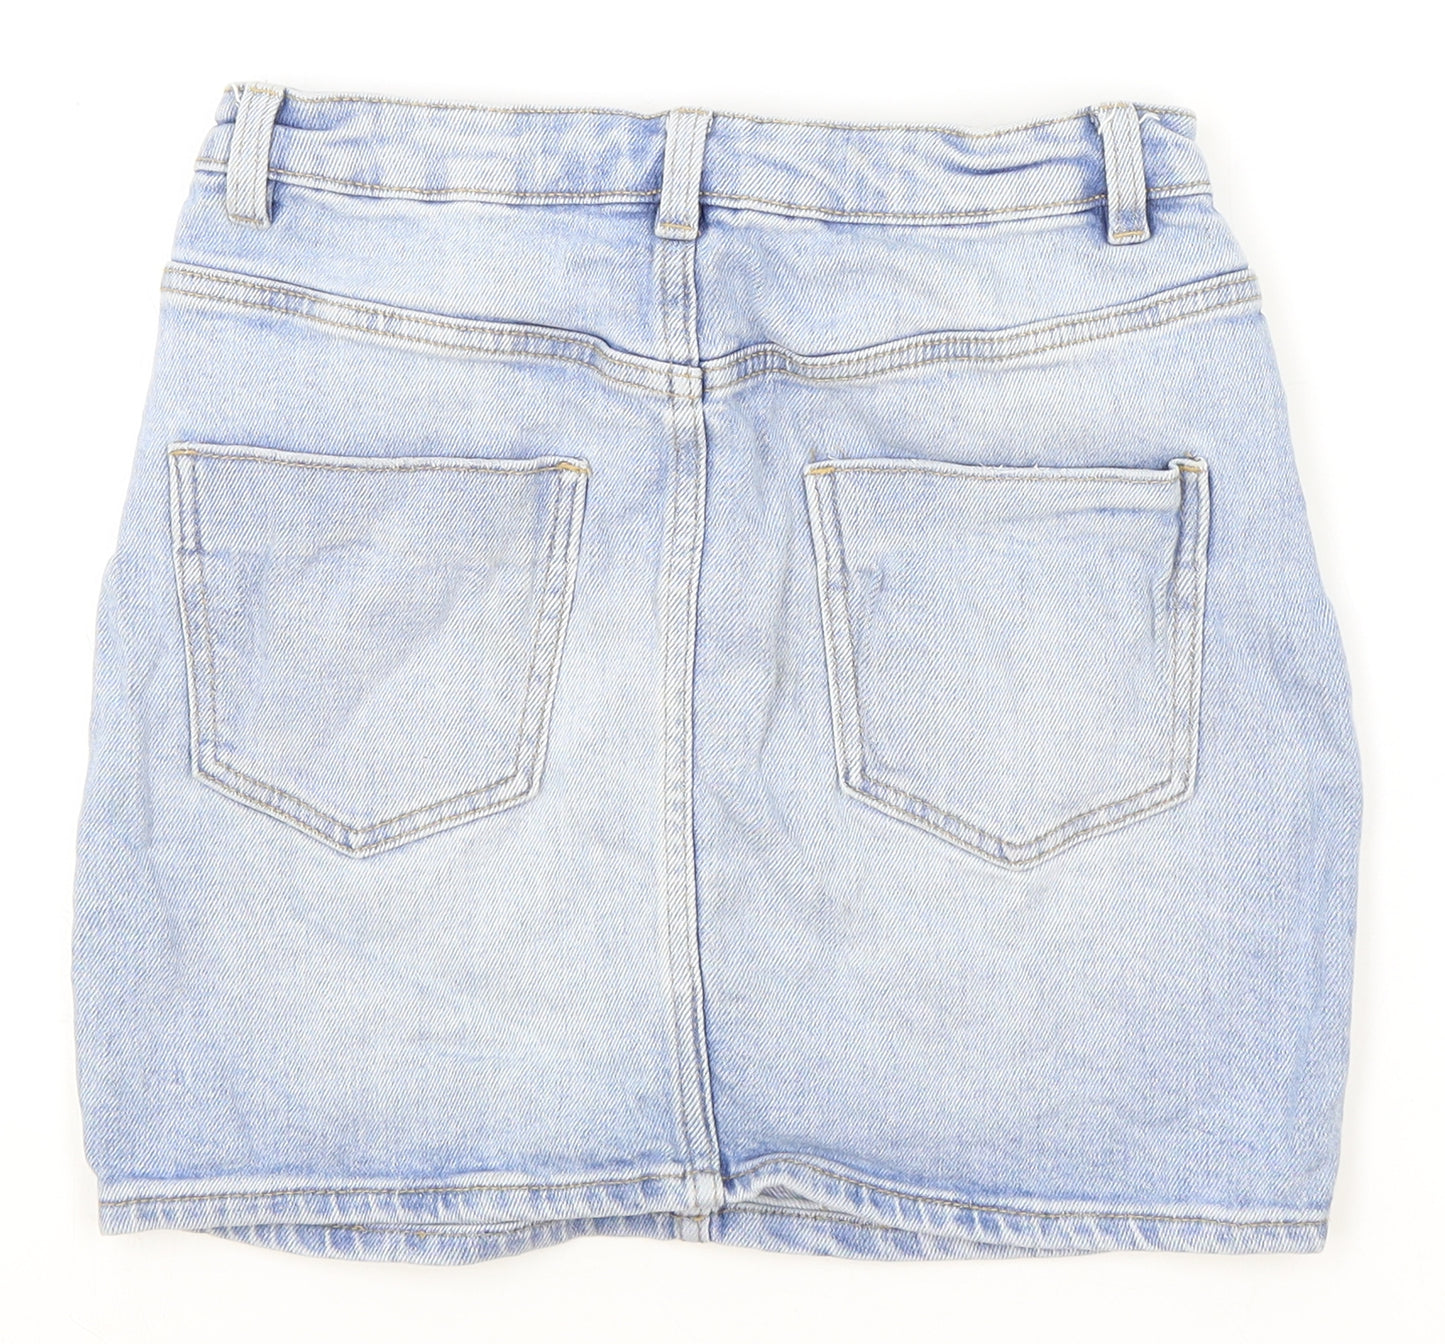 George Girls Blue Polyester Mini Skirt Size 10-11 Years Regular Button